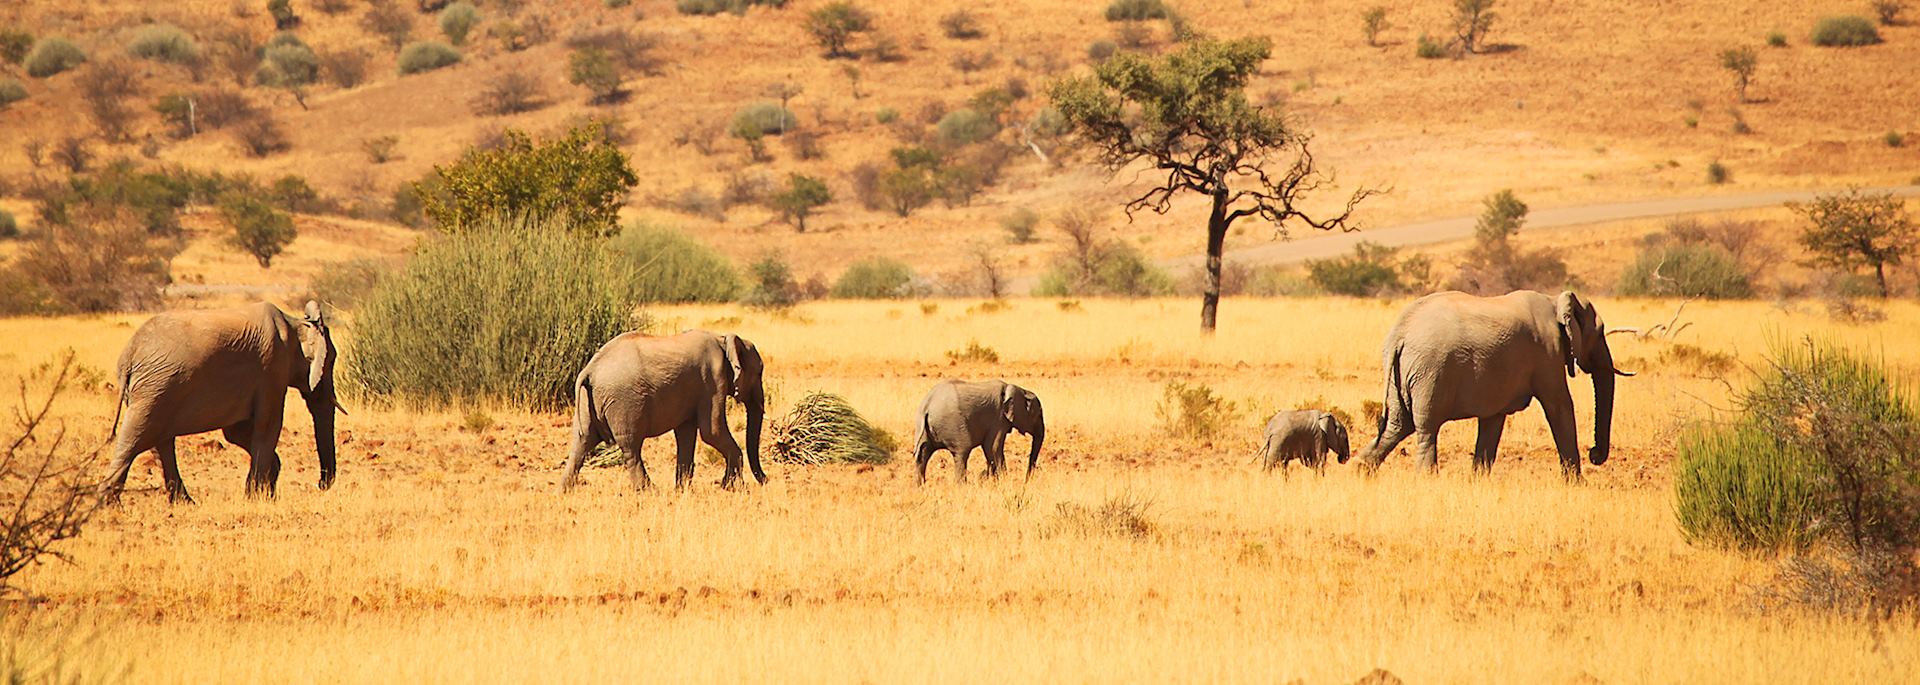 Family of elephants, Namibia